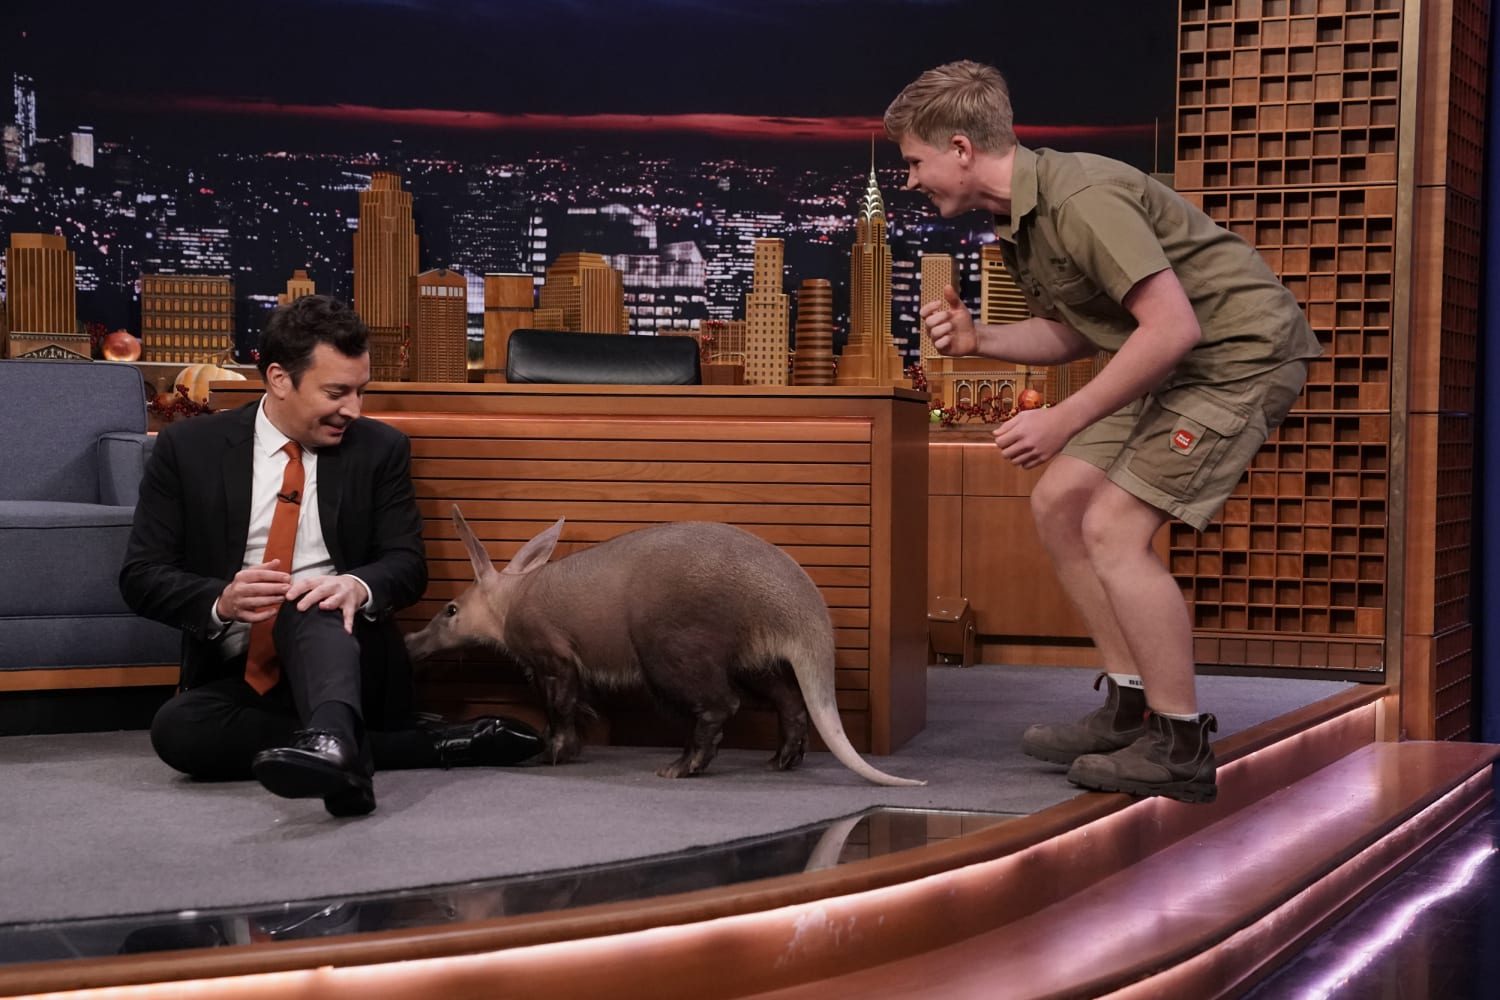 See Jimmy Fallon's hilarious reaction to meeting Robert Irwin's animals